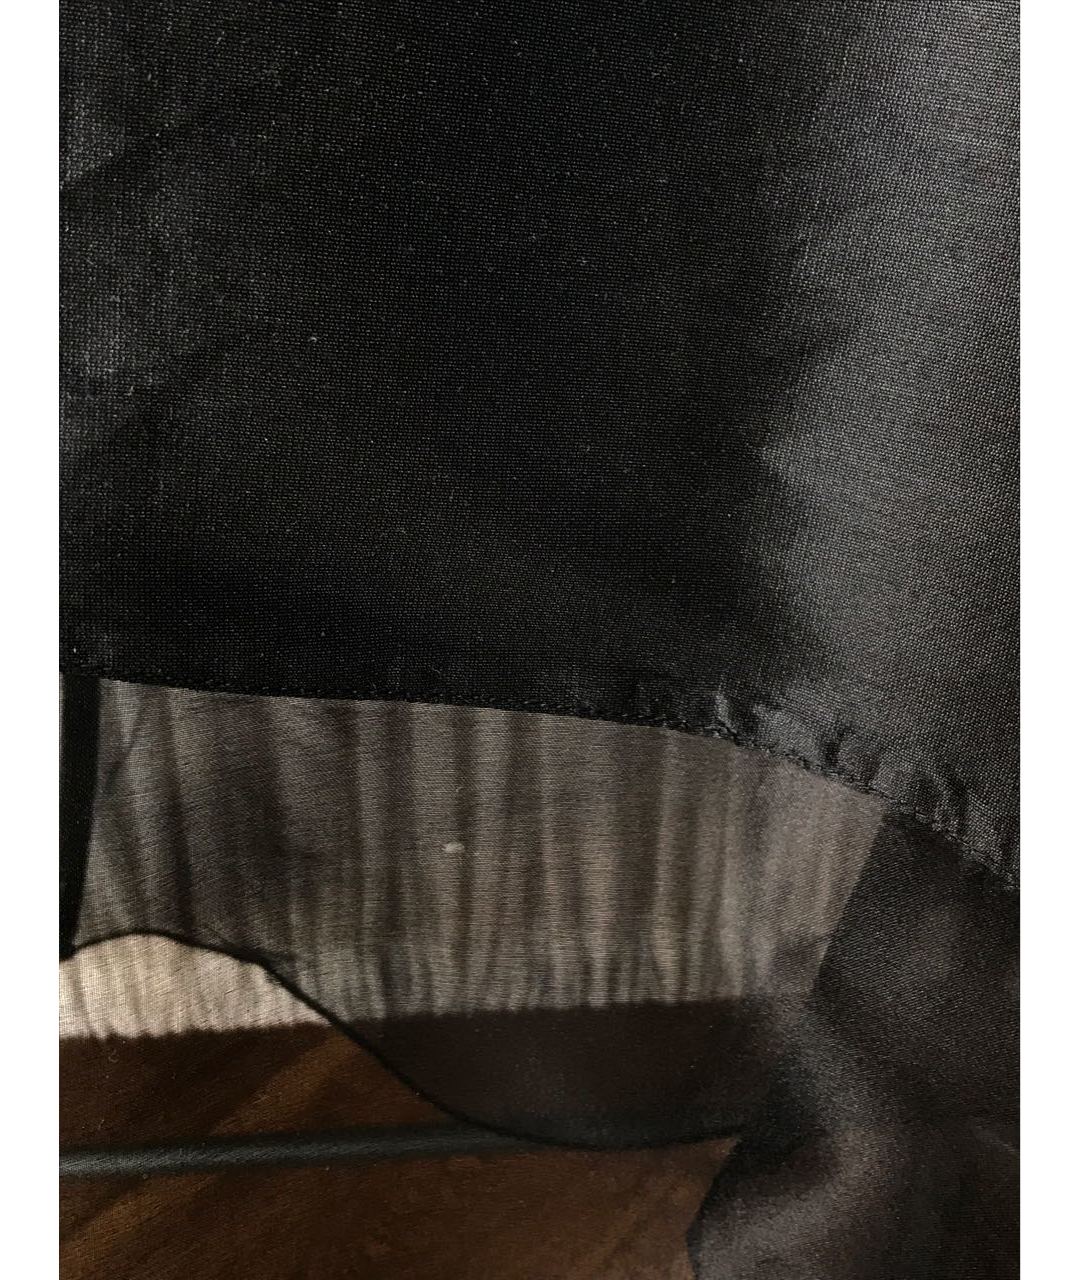 KARL LAGERFELD Черное шелковое вечернее платье, фото 7